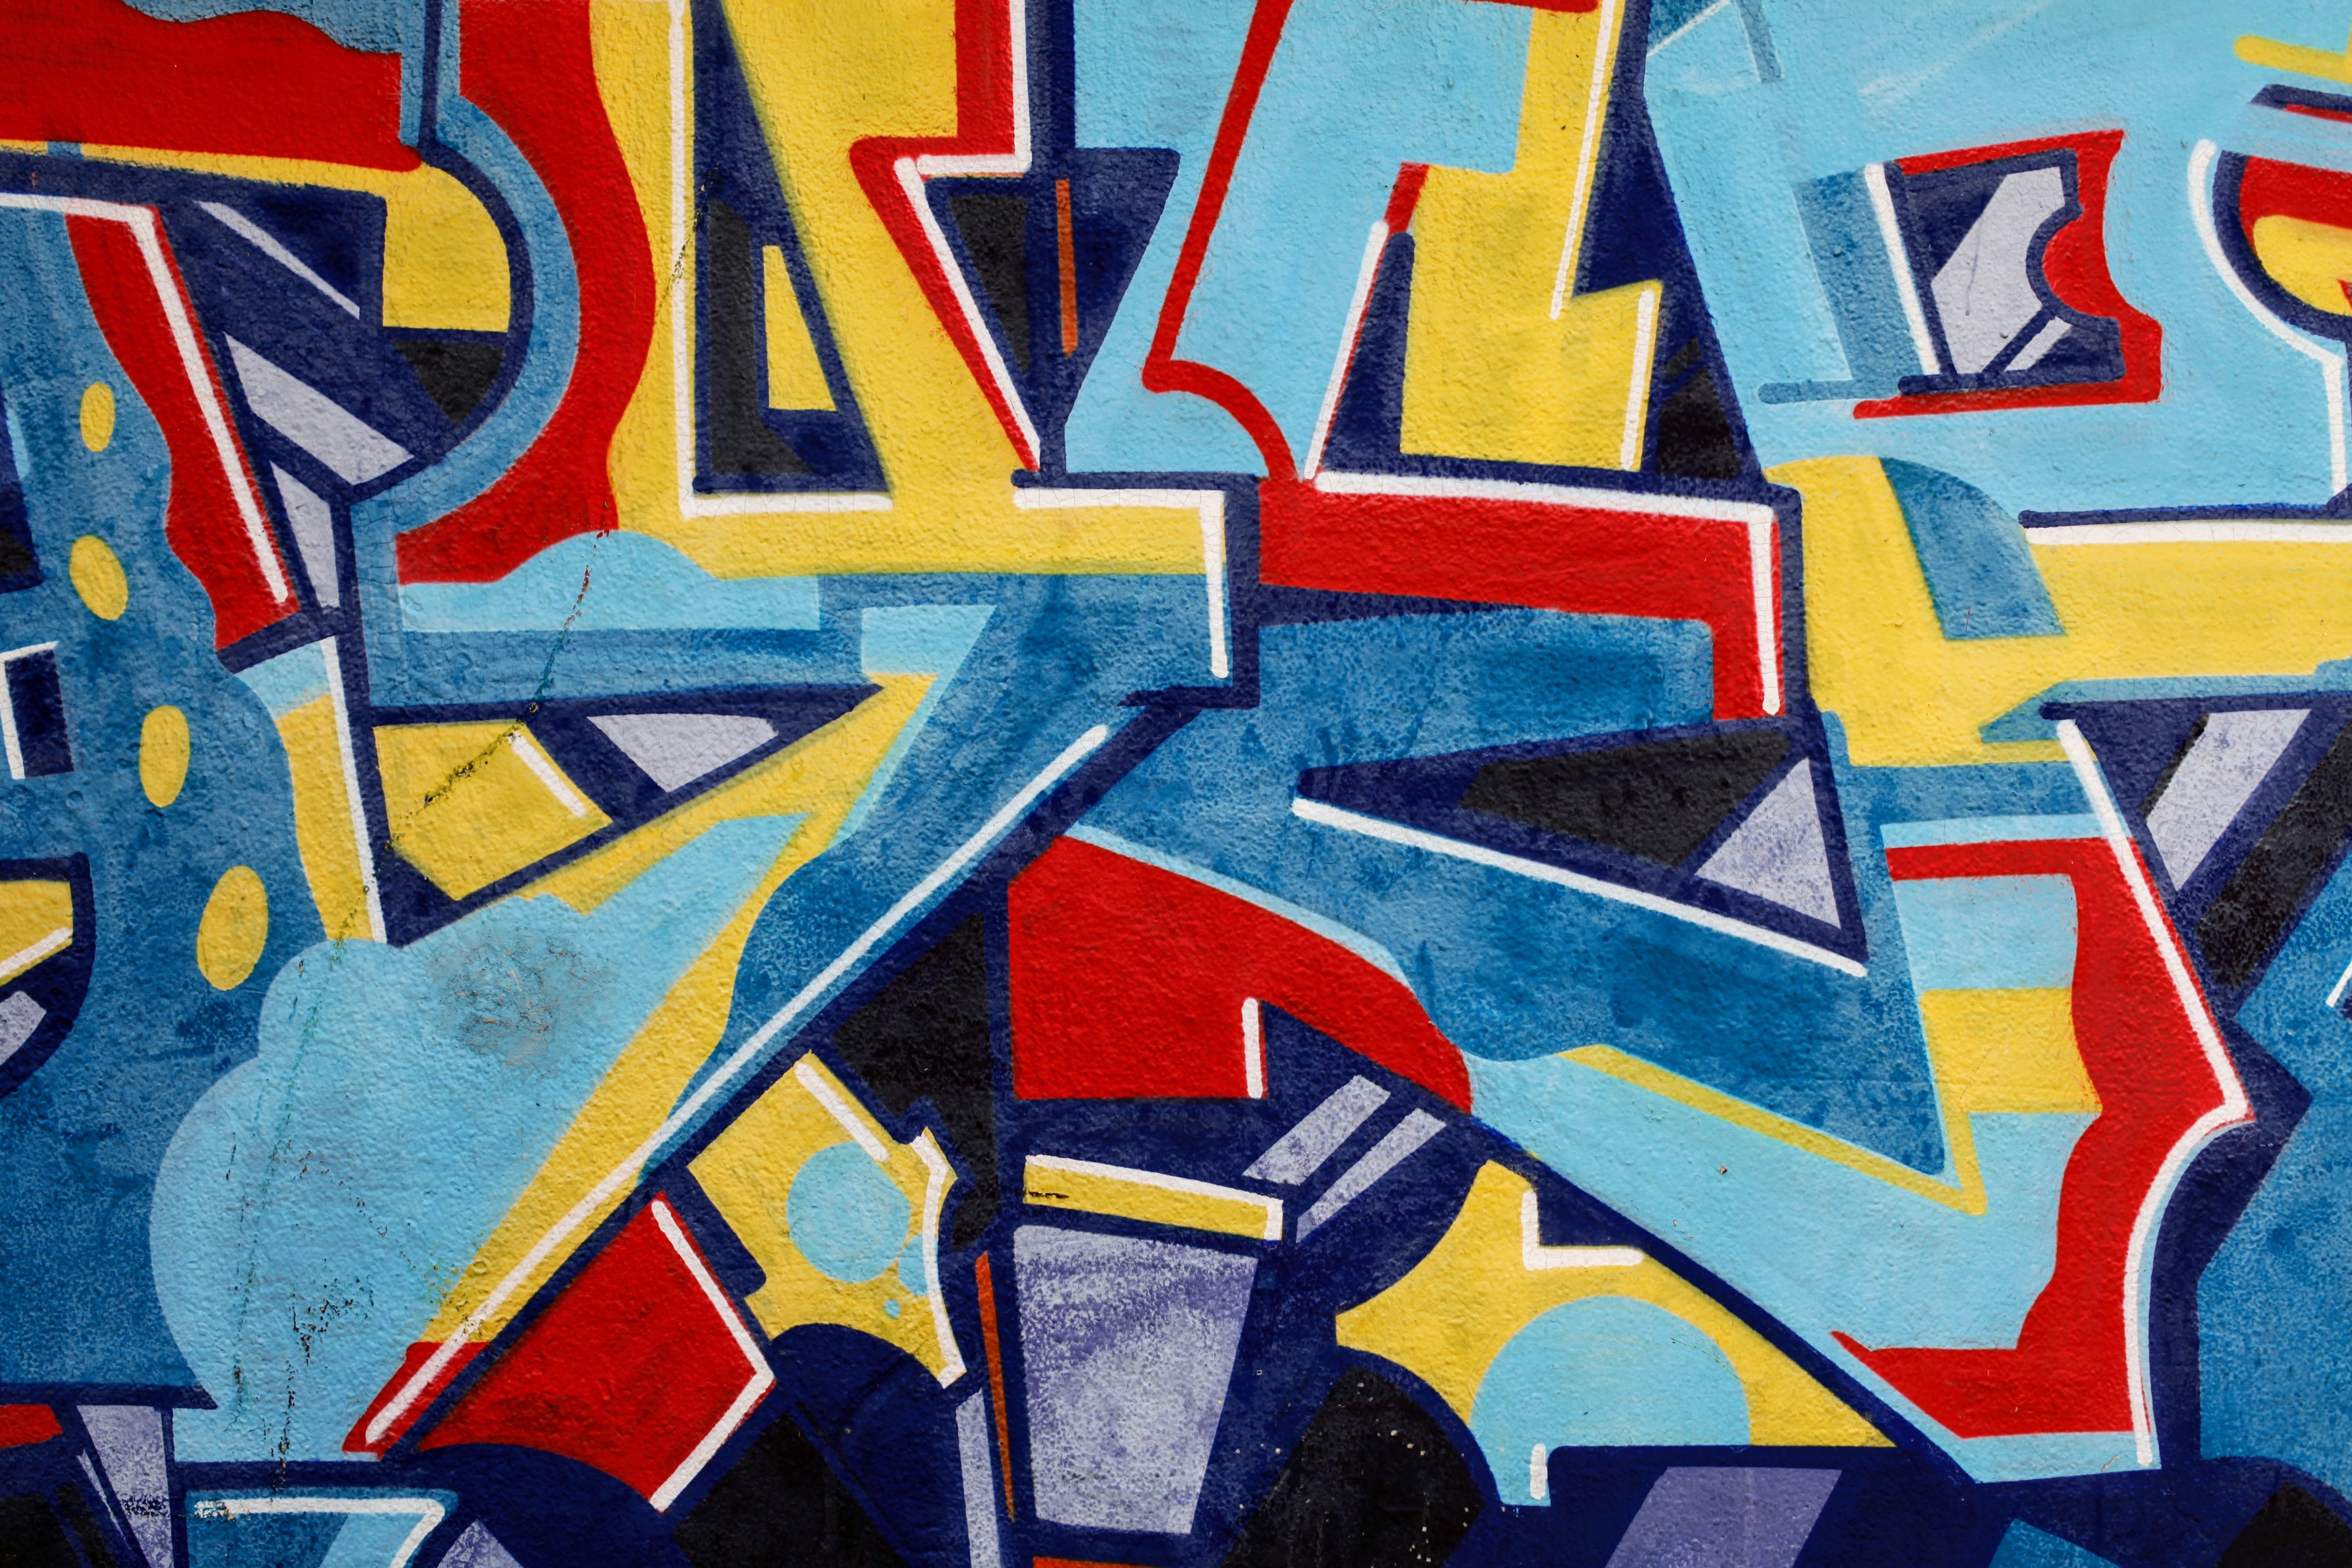 letters, graffiti, symbols, characters, miscellanea, miscellaneous, paint, wall